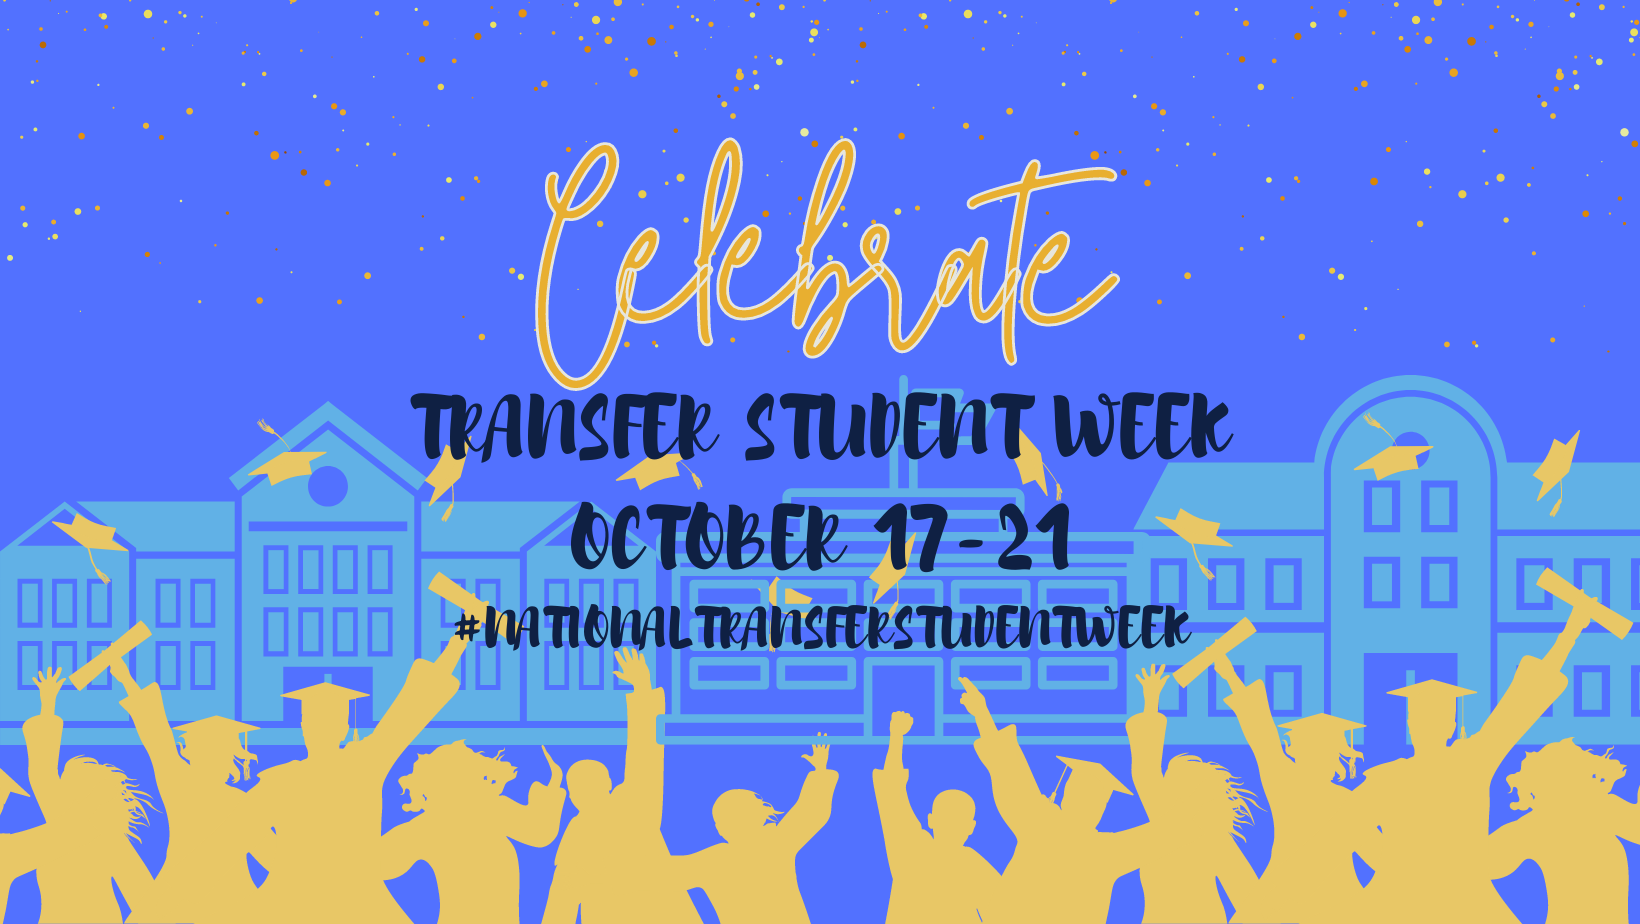 Celebrate Transfer Student Week